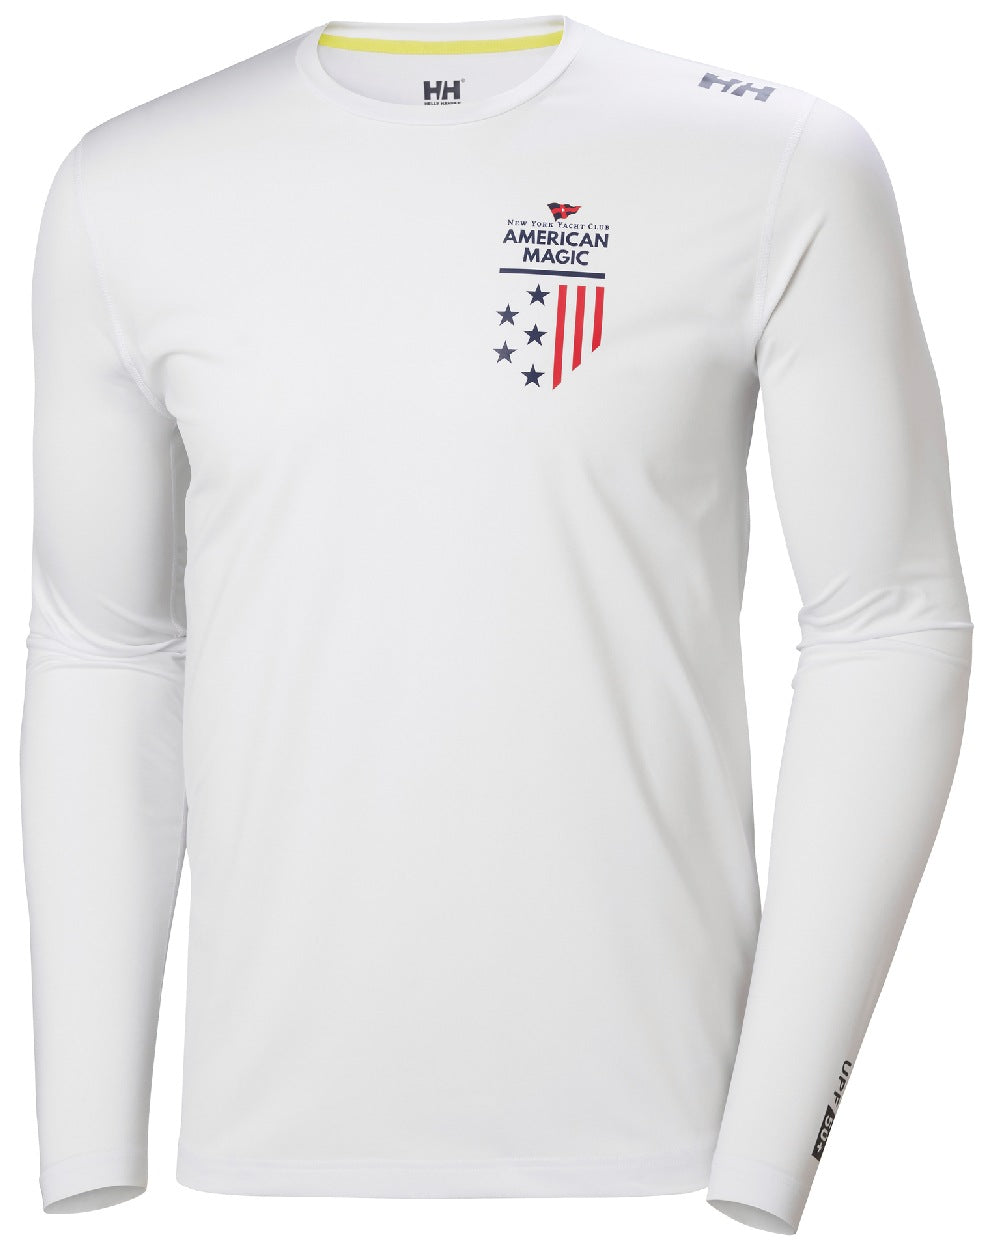 White coloured Helly Hansen American Magic UPF Tech Long Sleeves Shirt on white background 